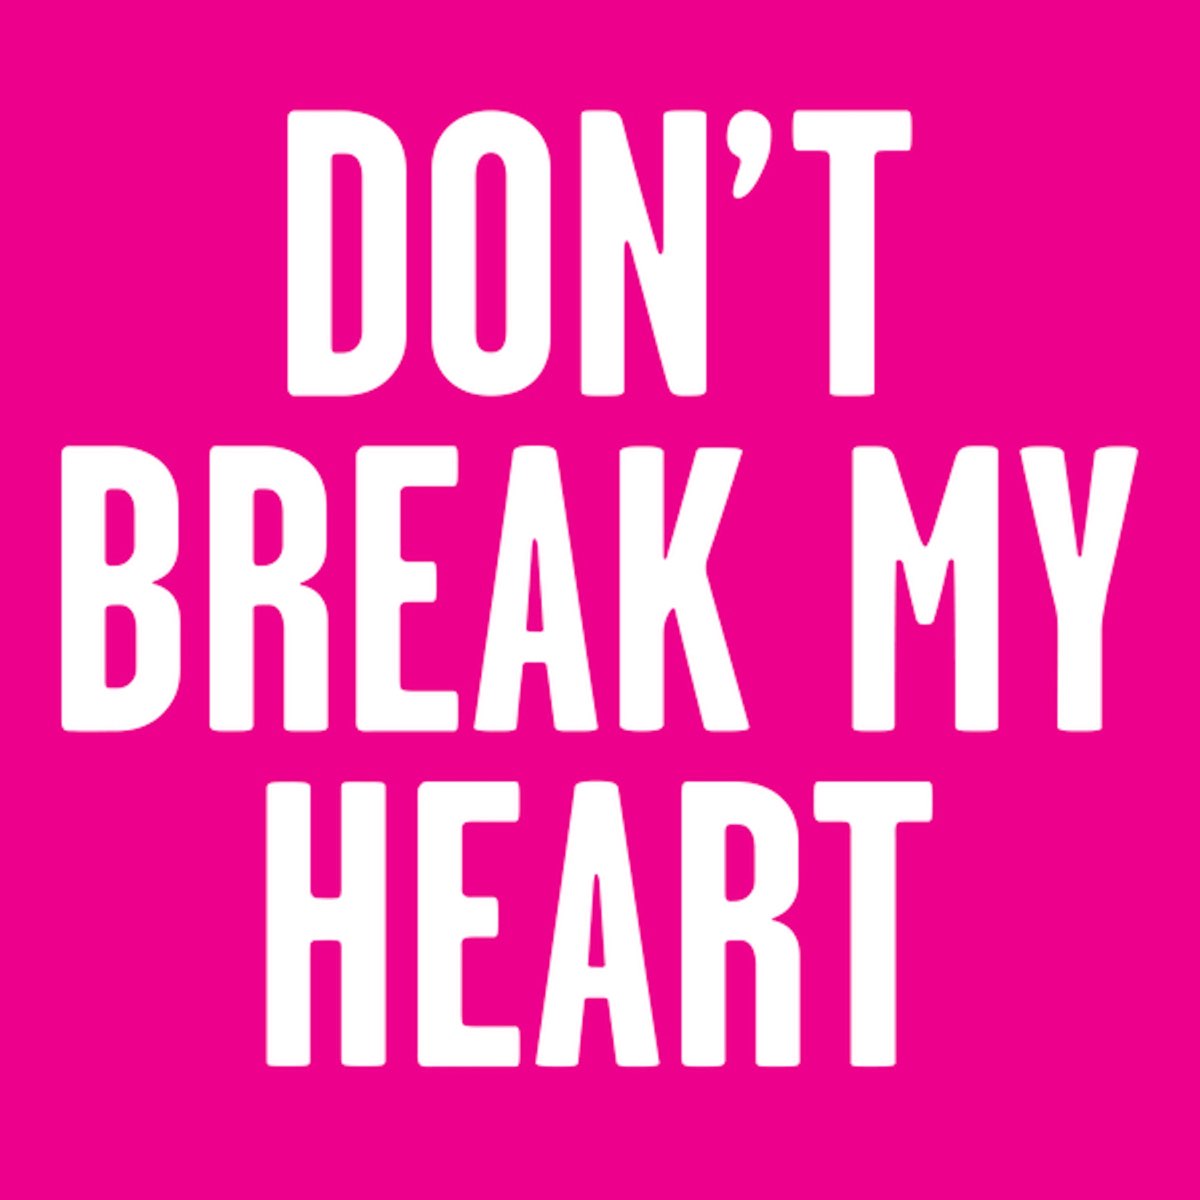 Dont heart